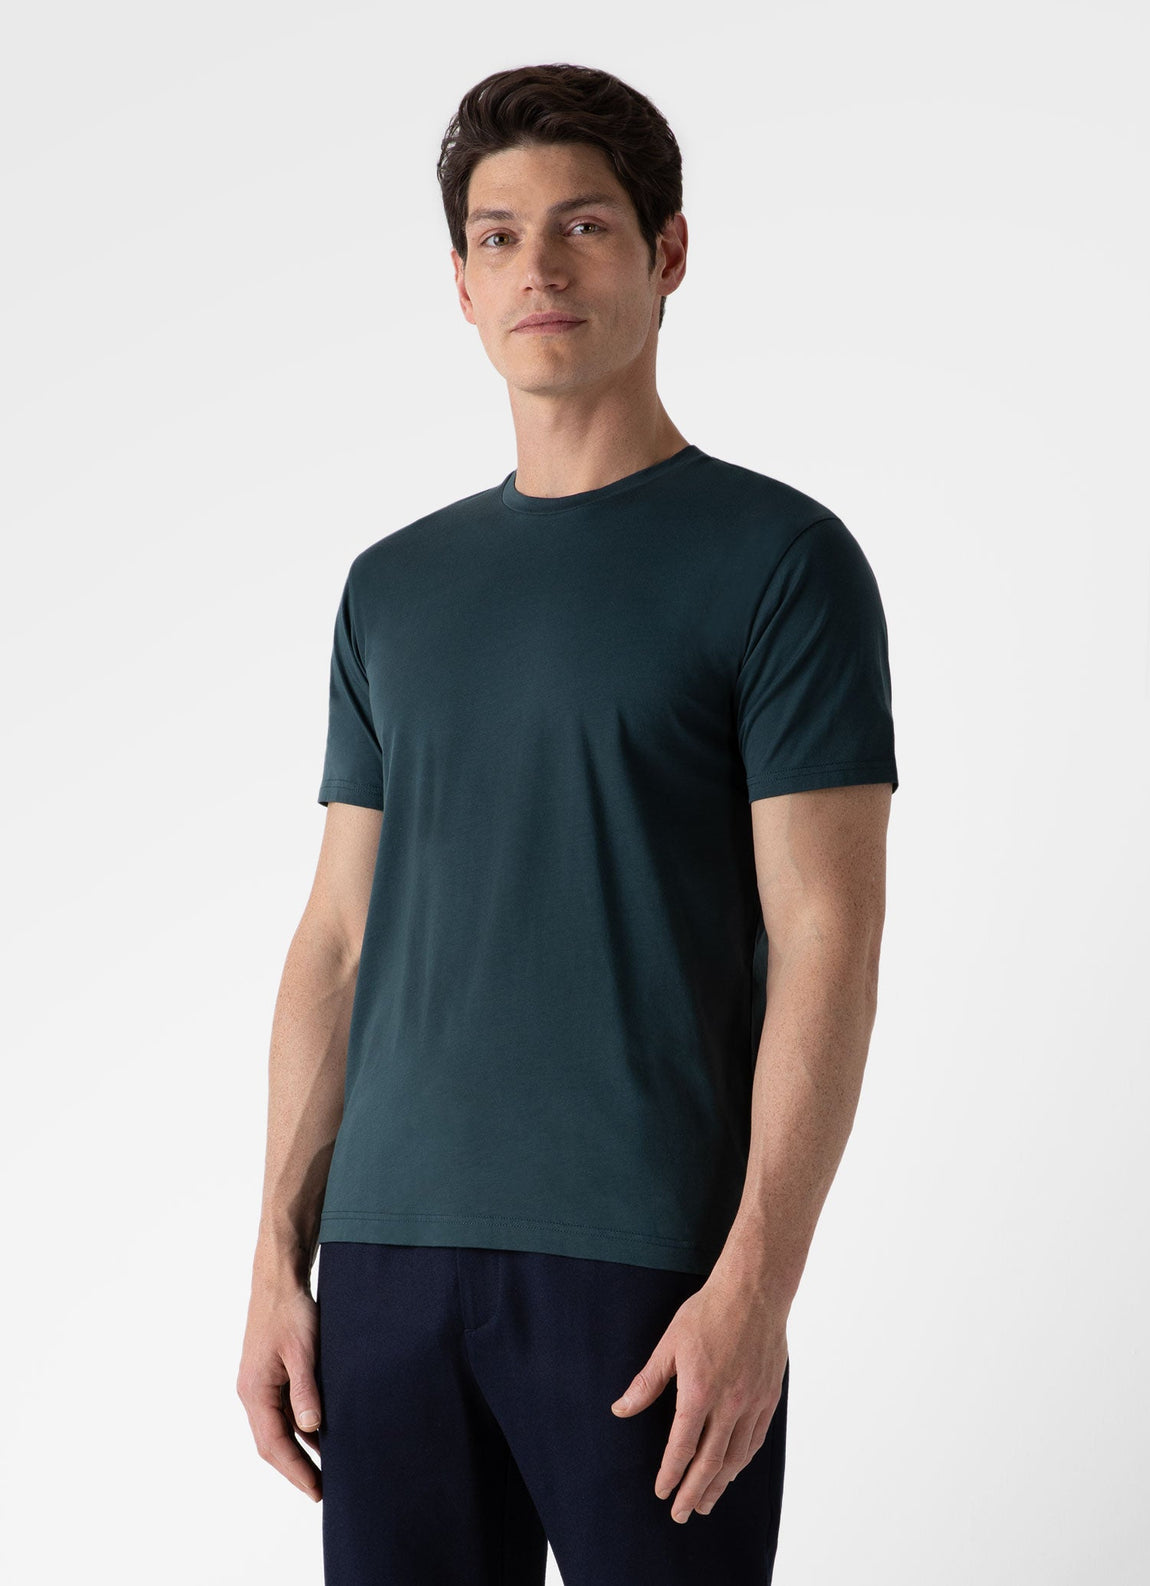 Men's Riviera Midweight T-shirt in Peacock | Sunspel